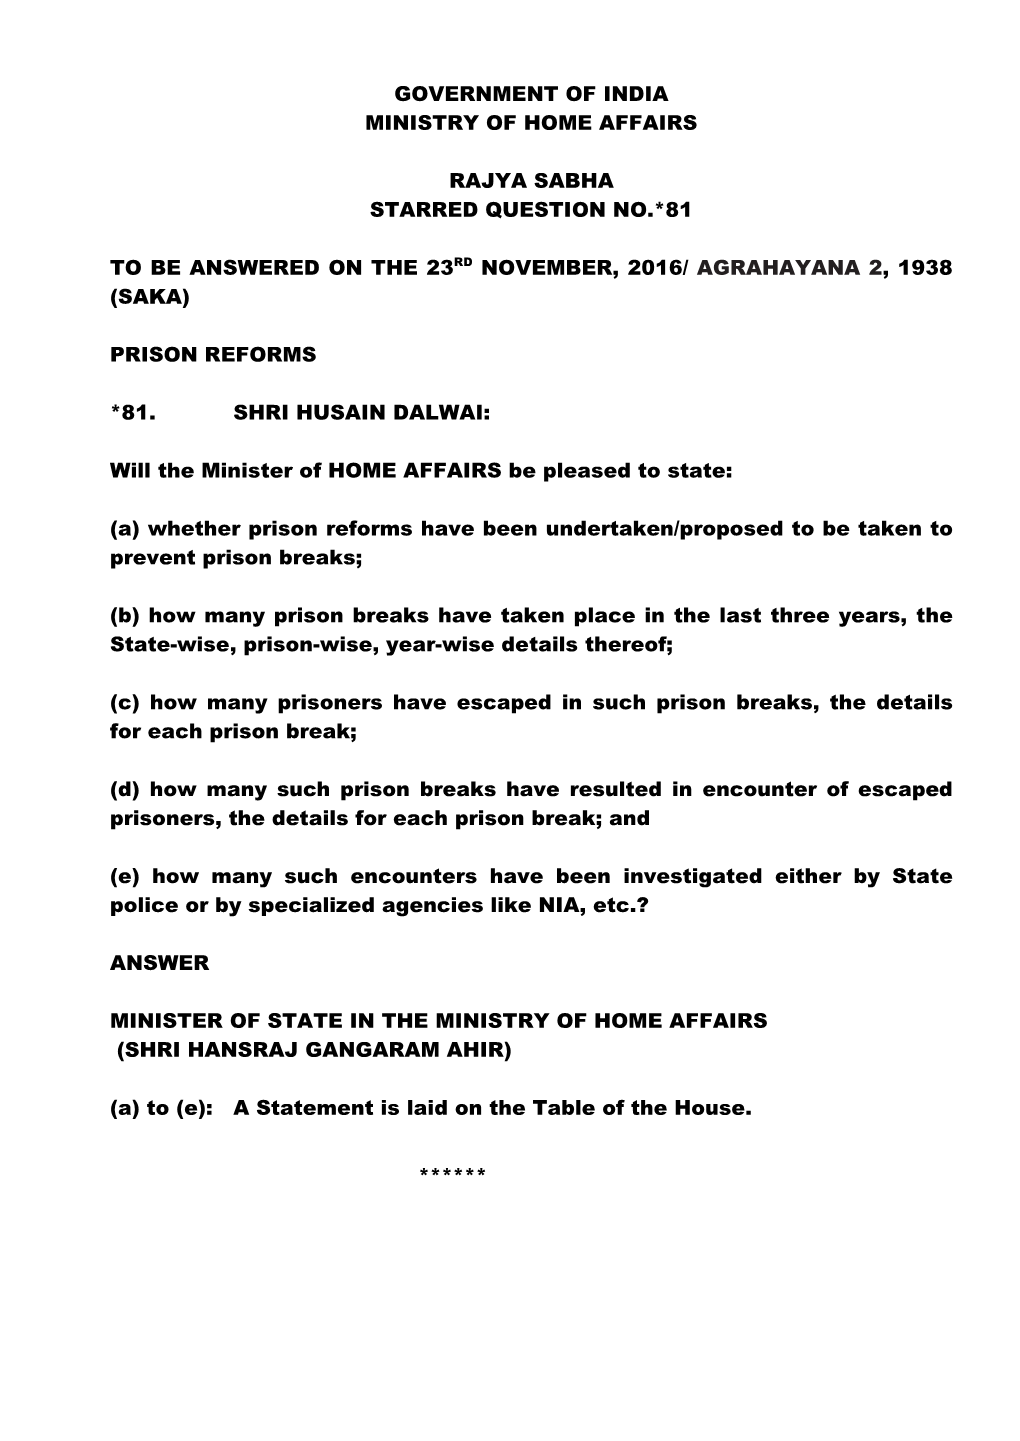 Government of India Ministry of Home Affairs Rajya Sabha